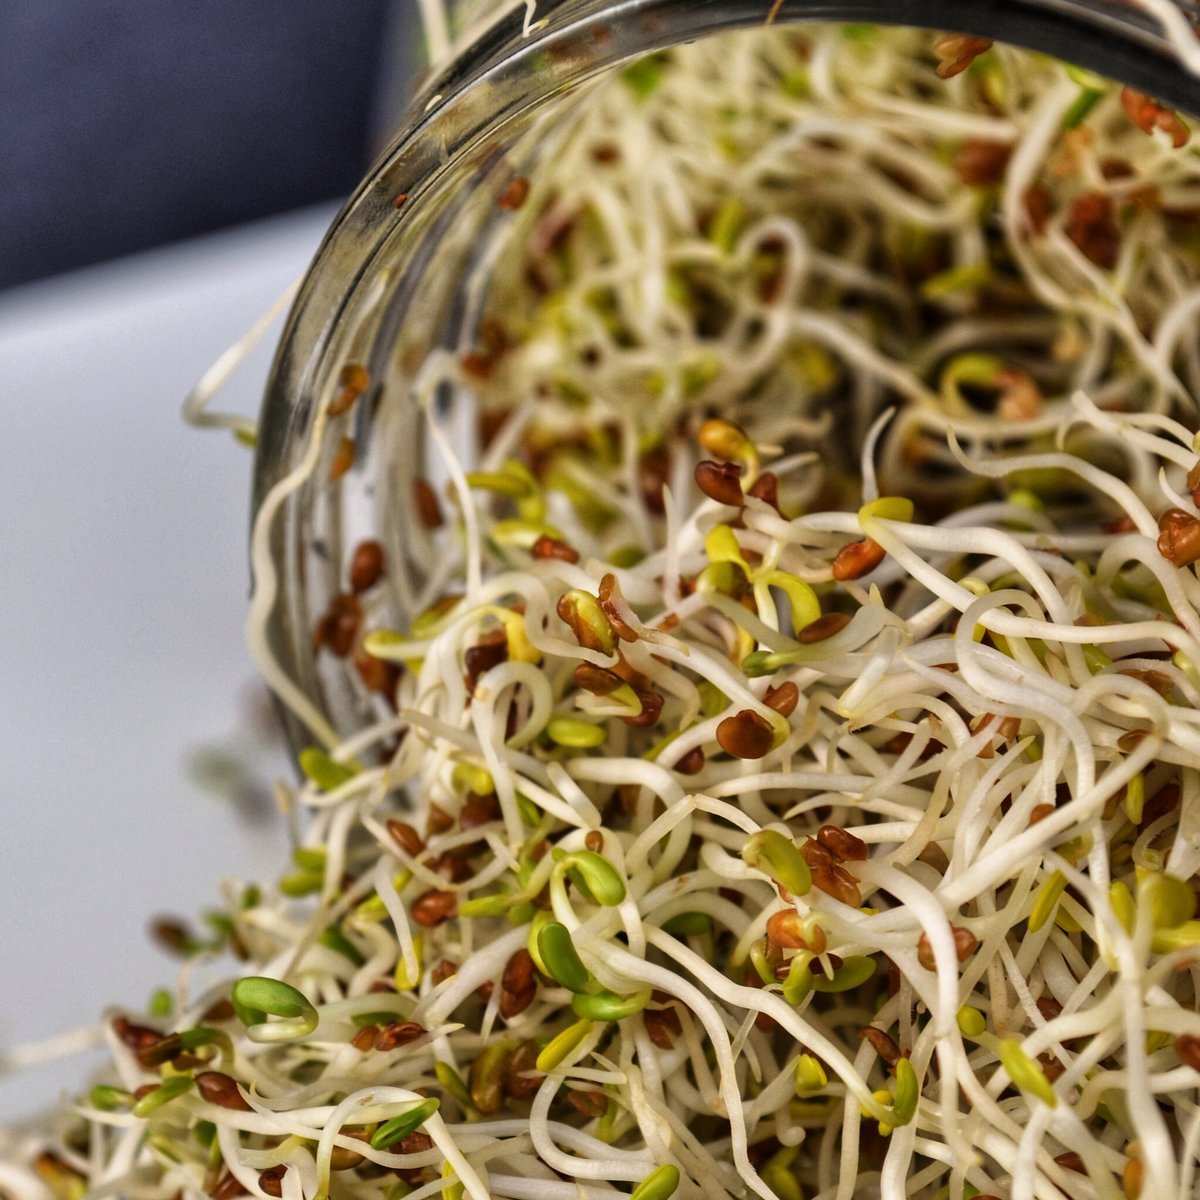 A jar of alfalfa sprouts